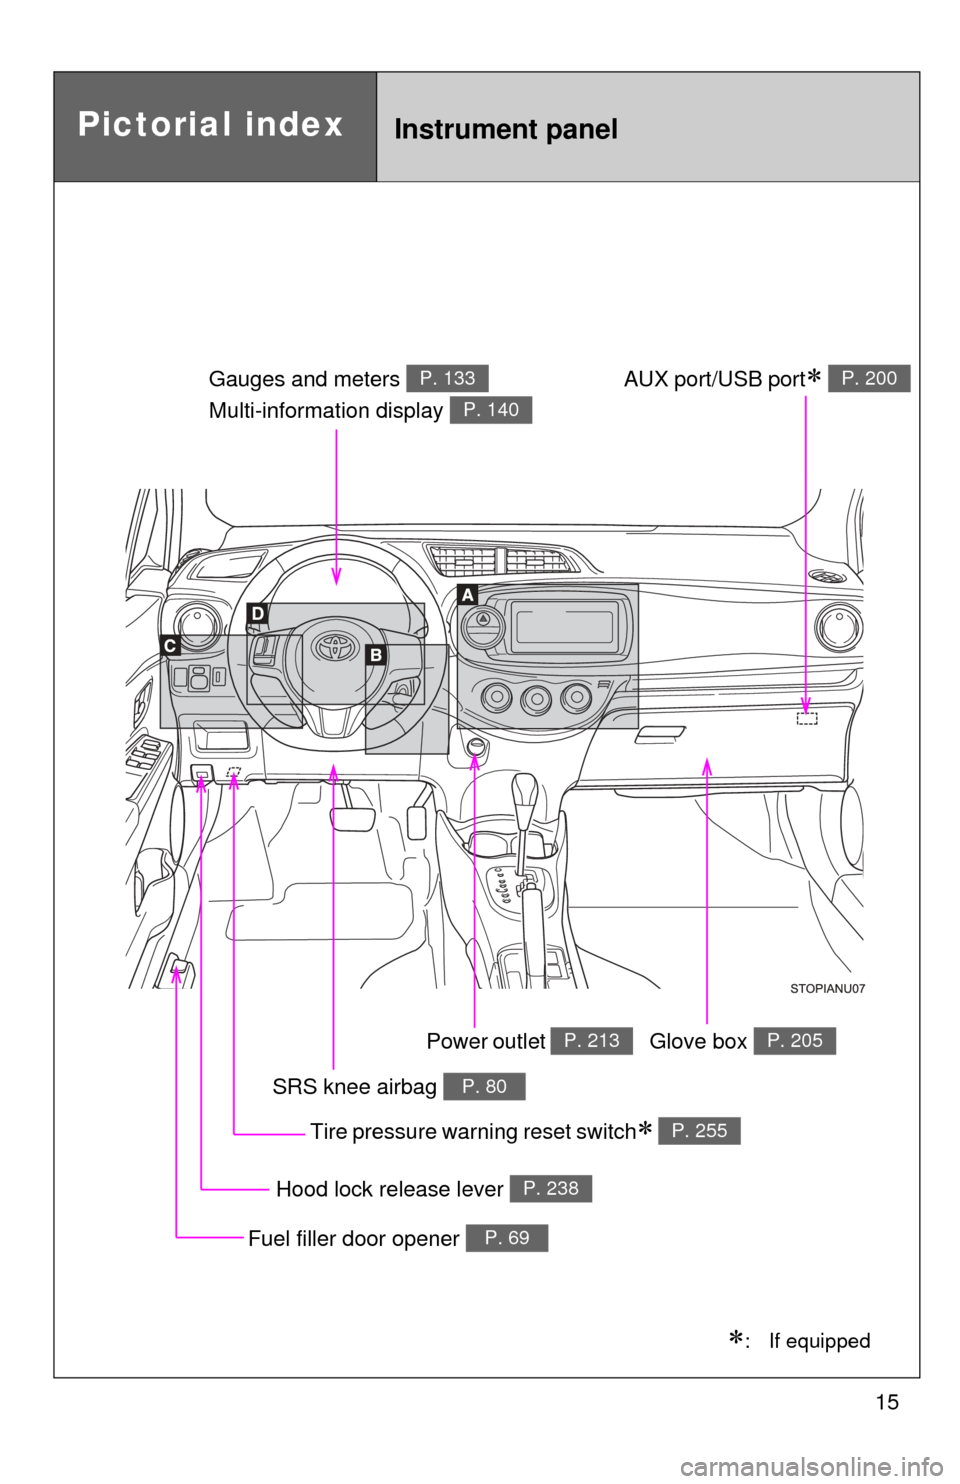 TOYOTA YARIS 2013 3.G Owners Manual 15
Pictorial indexInstrument panel
SRS knee airbag P. 80
Hood lock release lever P. 238
Gauges and meters 
Multi-information display P. 133
P. 140
Glove box P. 205
Fuel filler door opener P. 69
: I